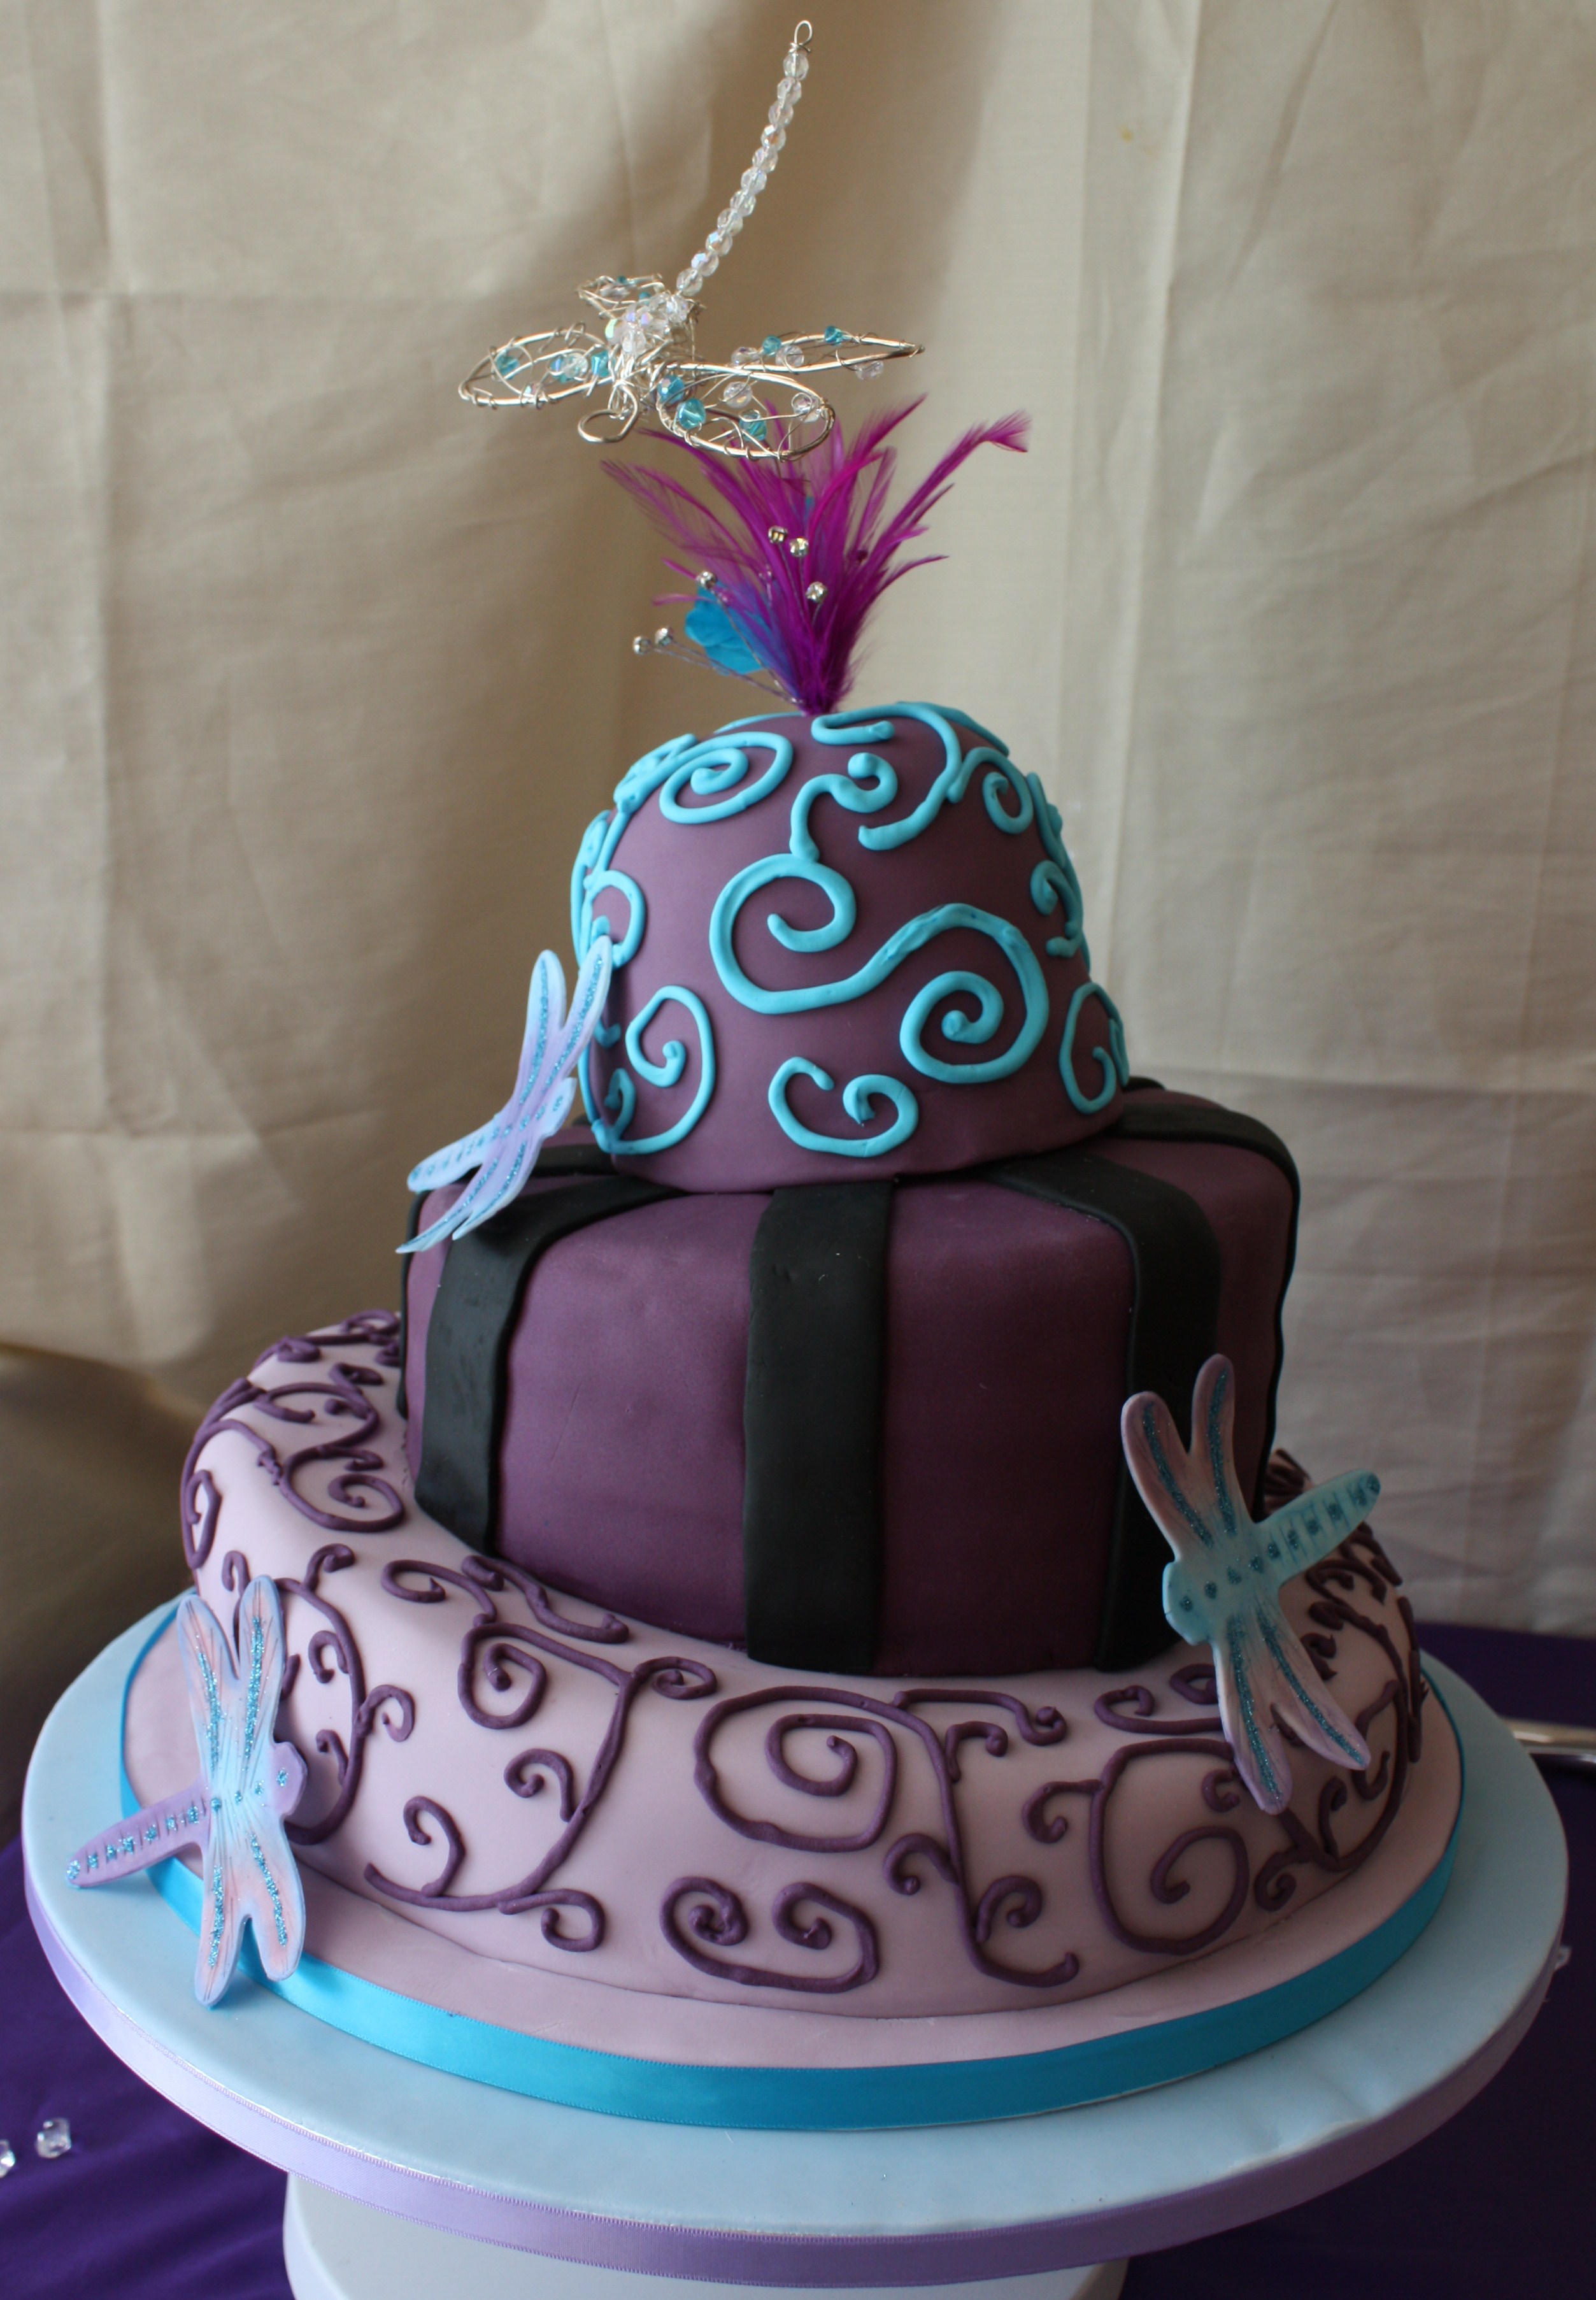 The Cole's wonky wedding cake | Esarbee's Blog